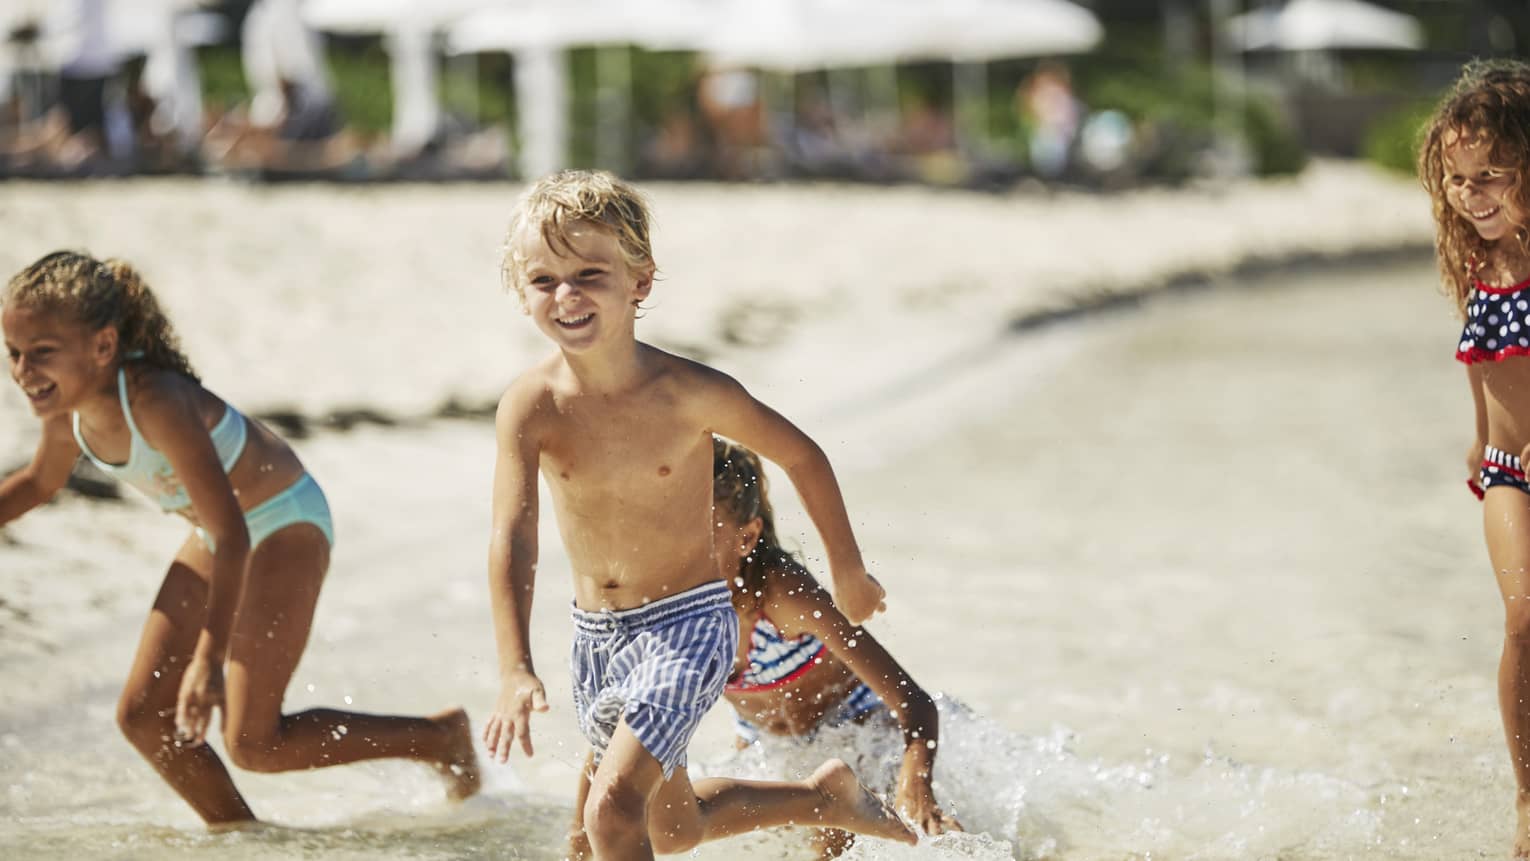 Kids in swimsuits run, laugh on sand beach